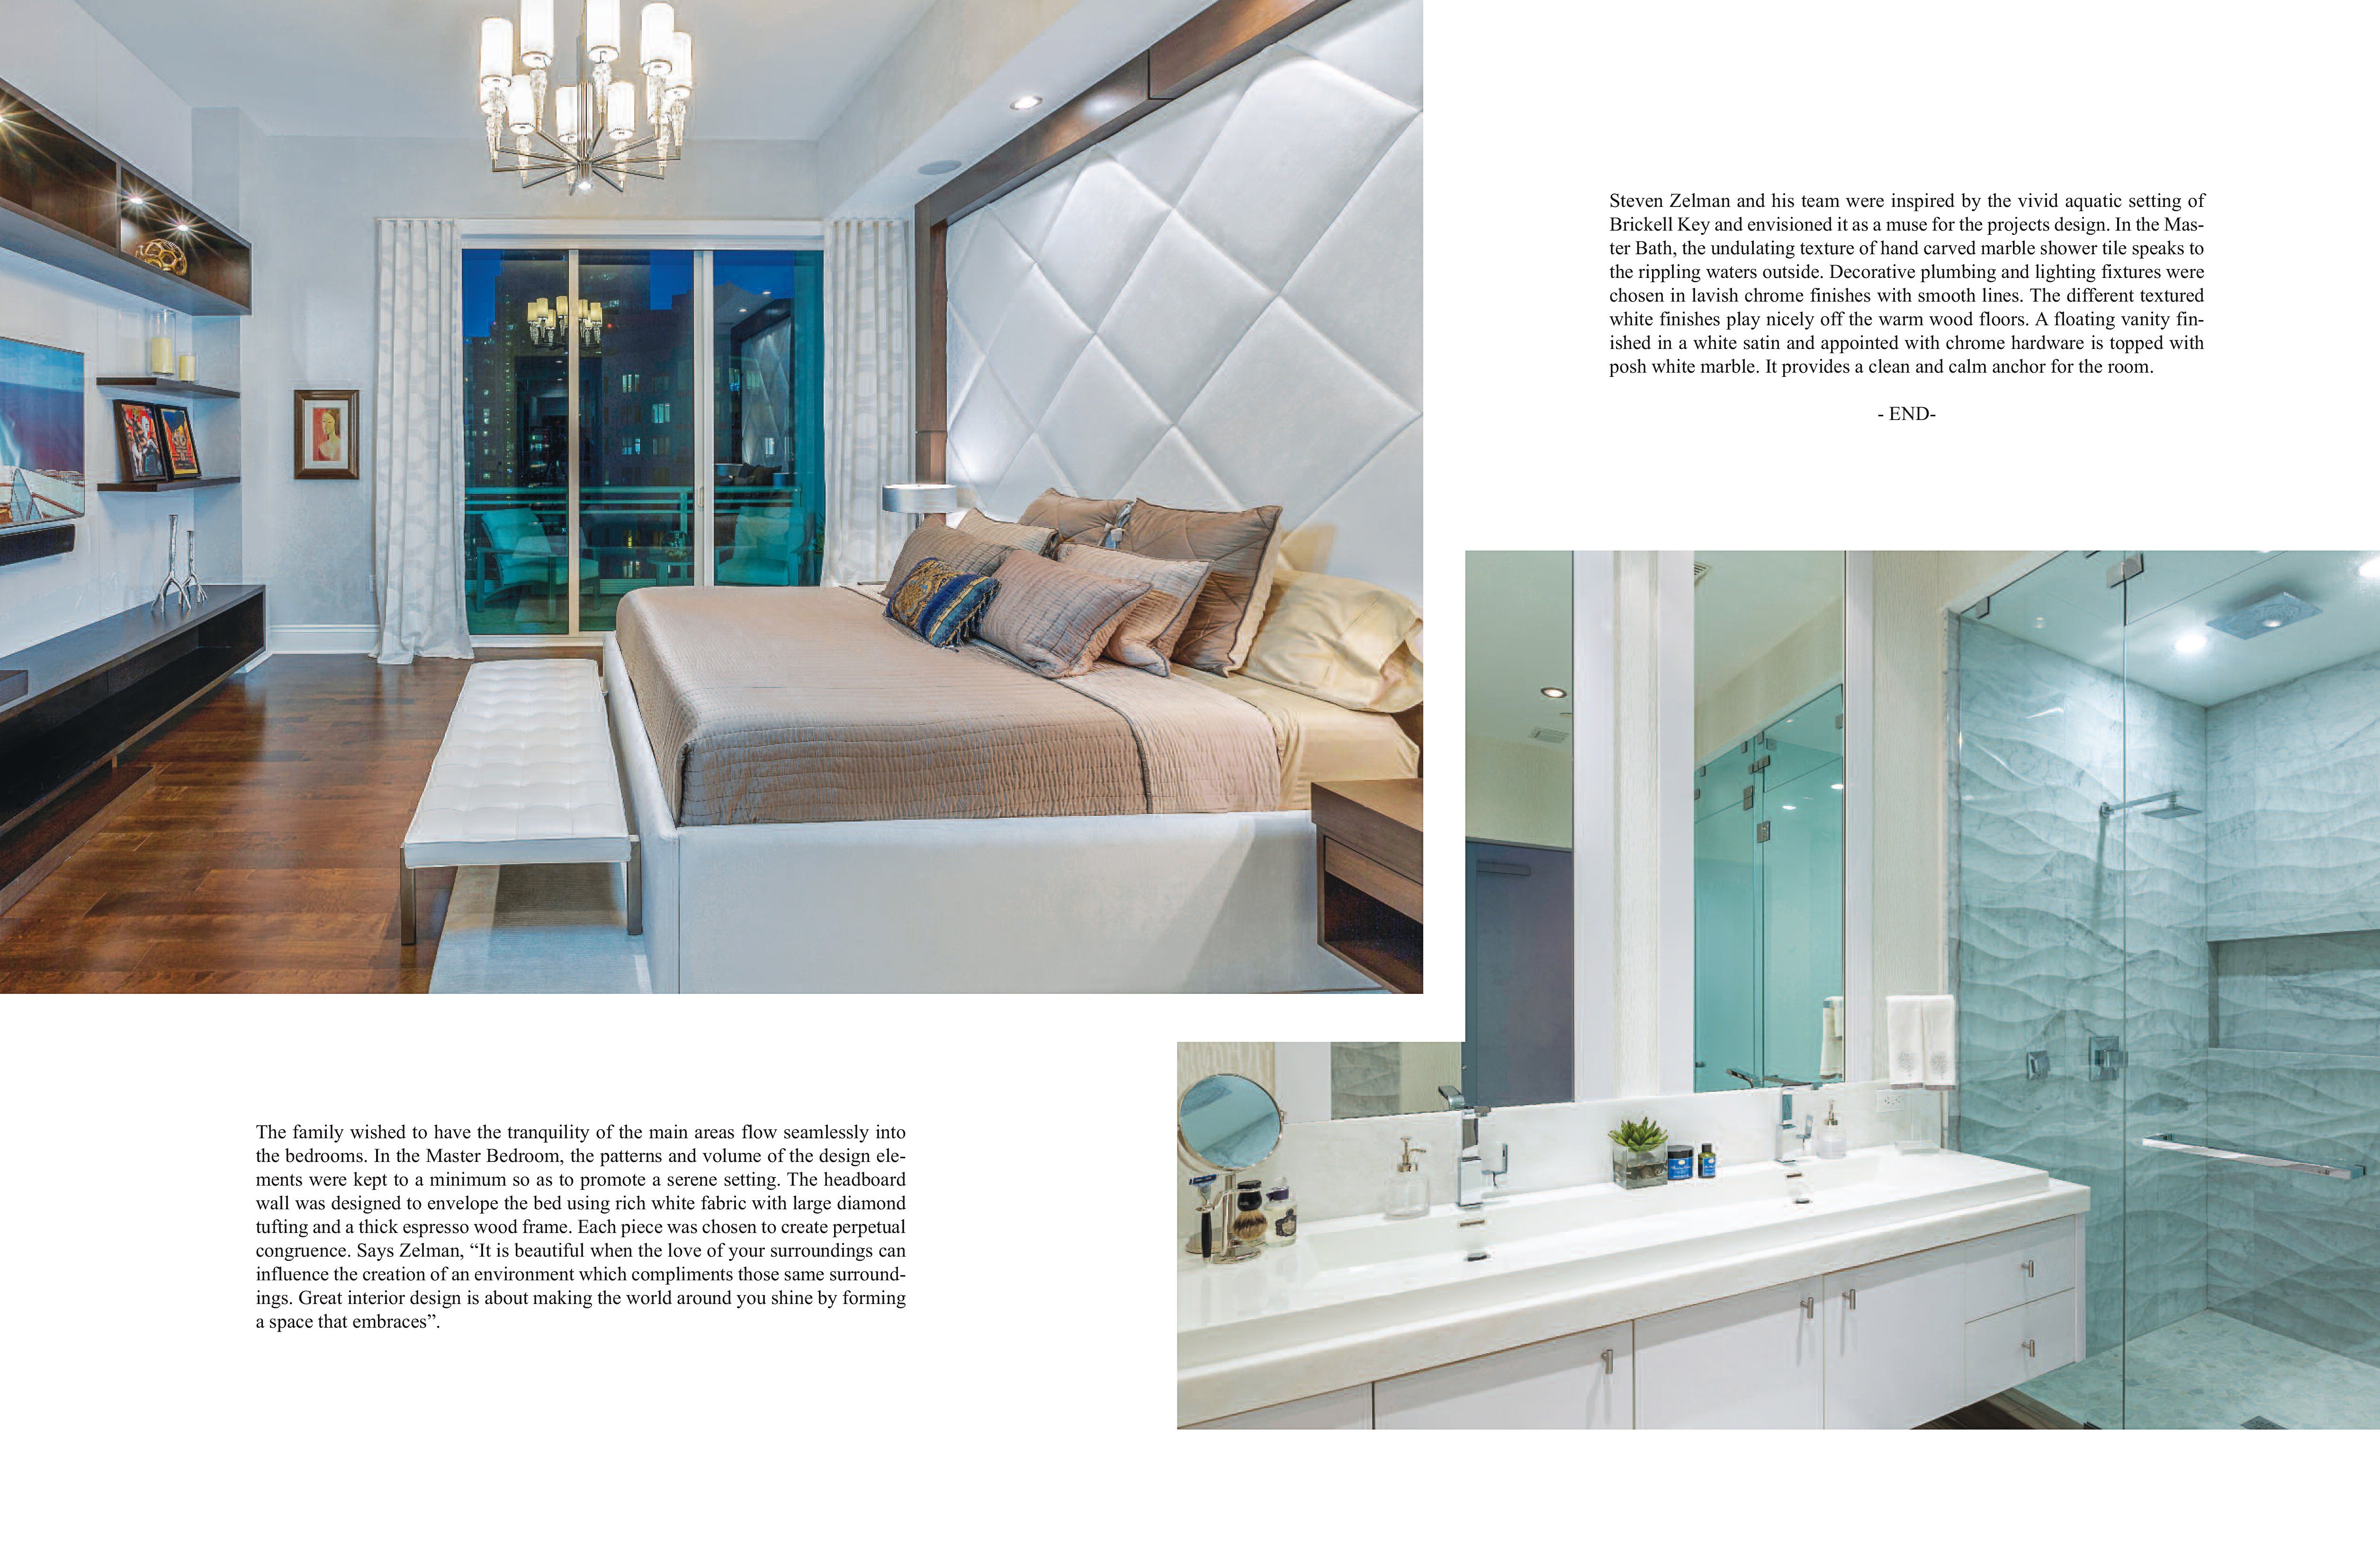 Florida Decor Magazine Featured Steven Zelman Interior Designer